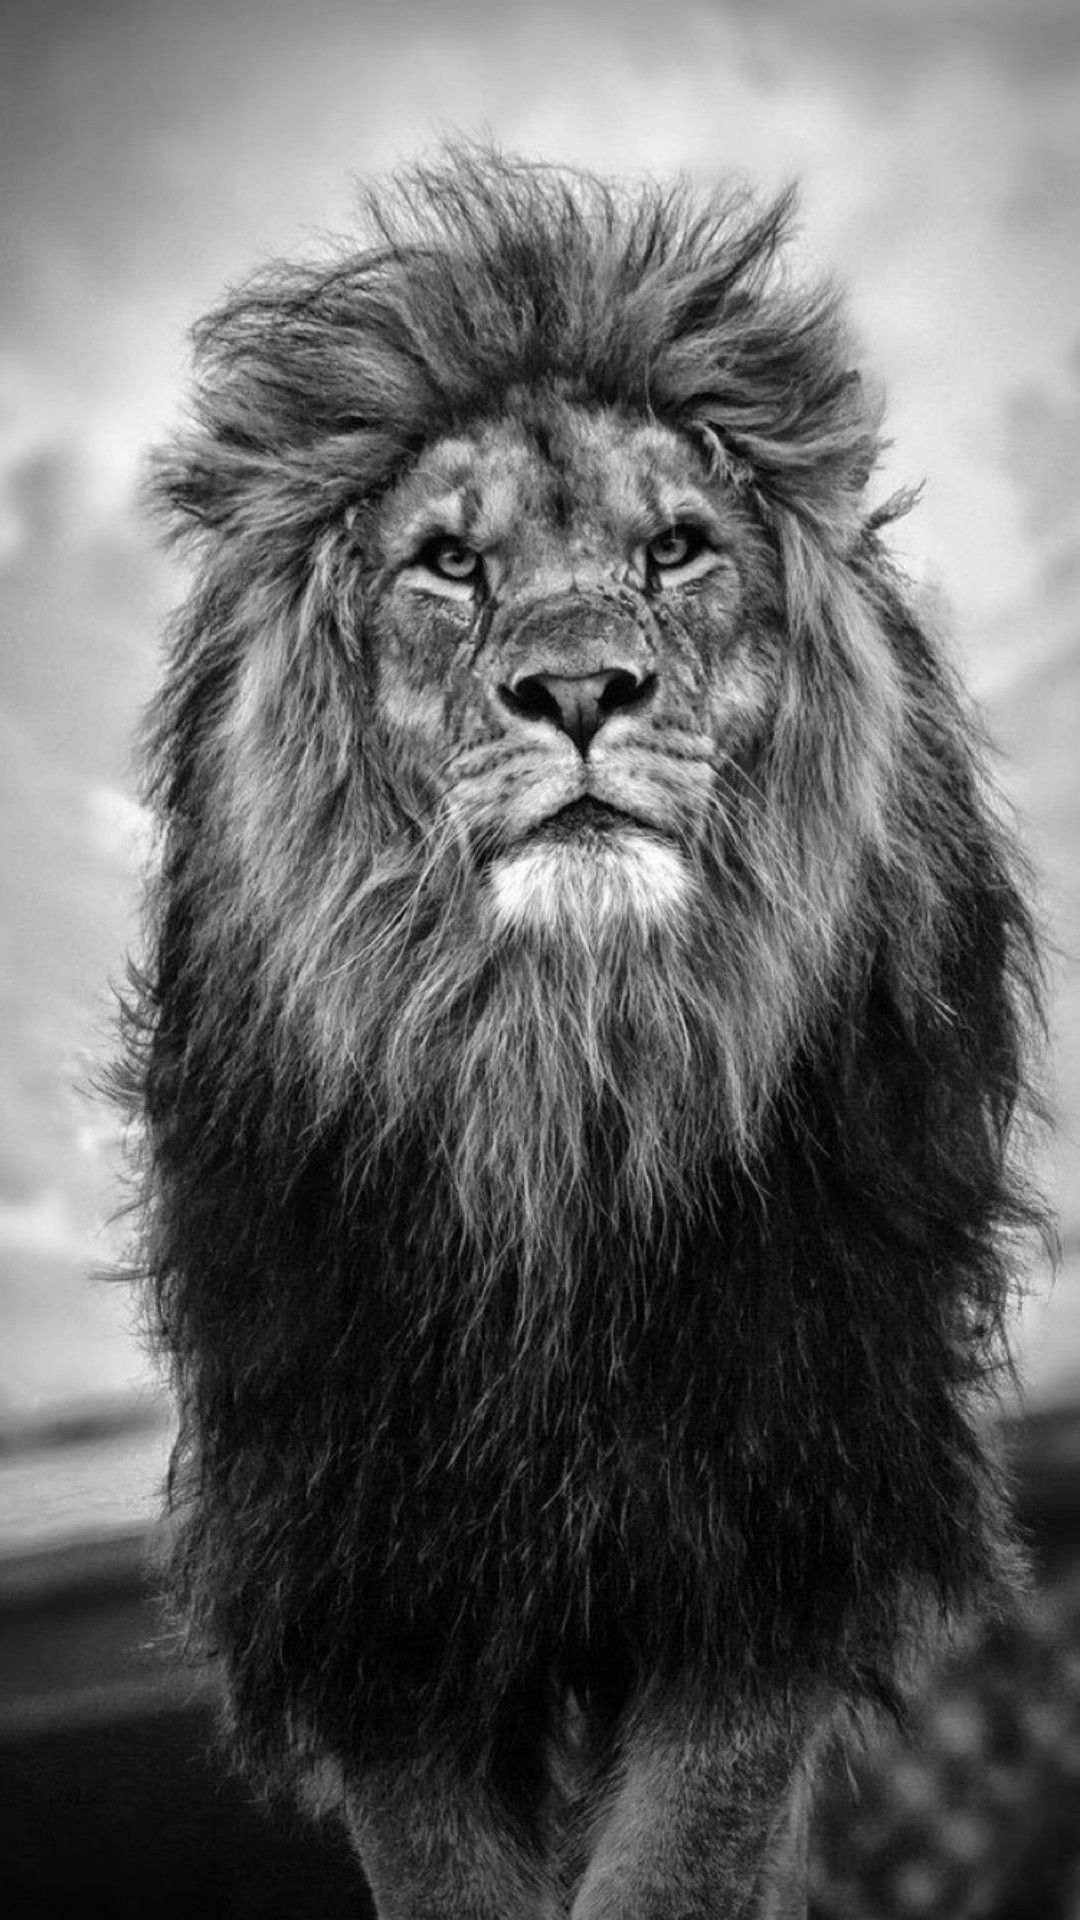 The Infernus King Lion on Fire Tattoo 